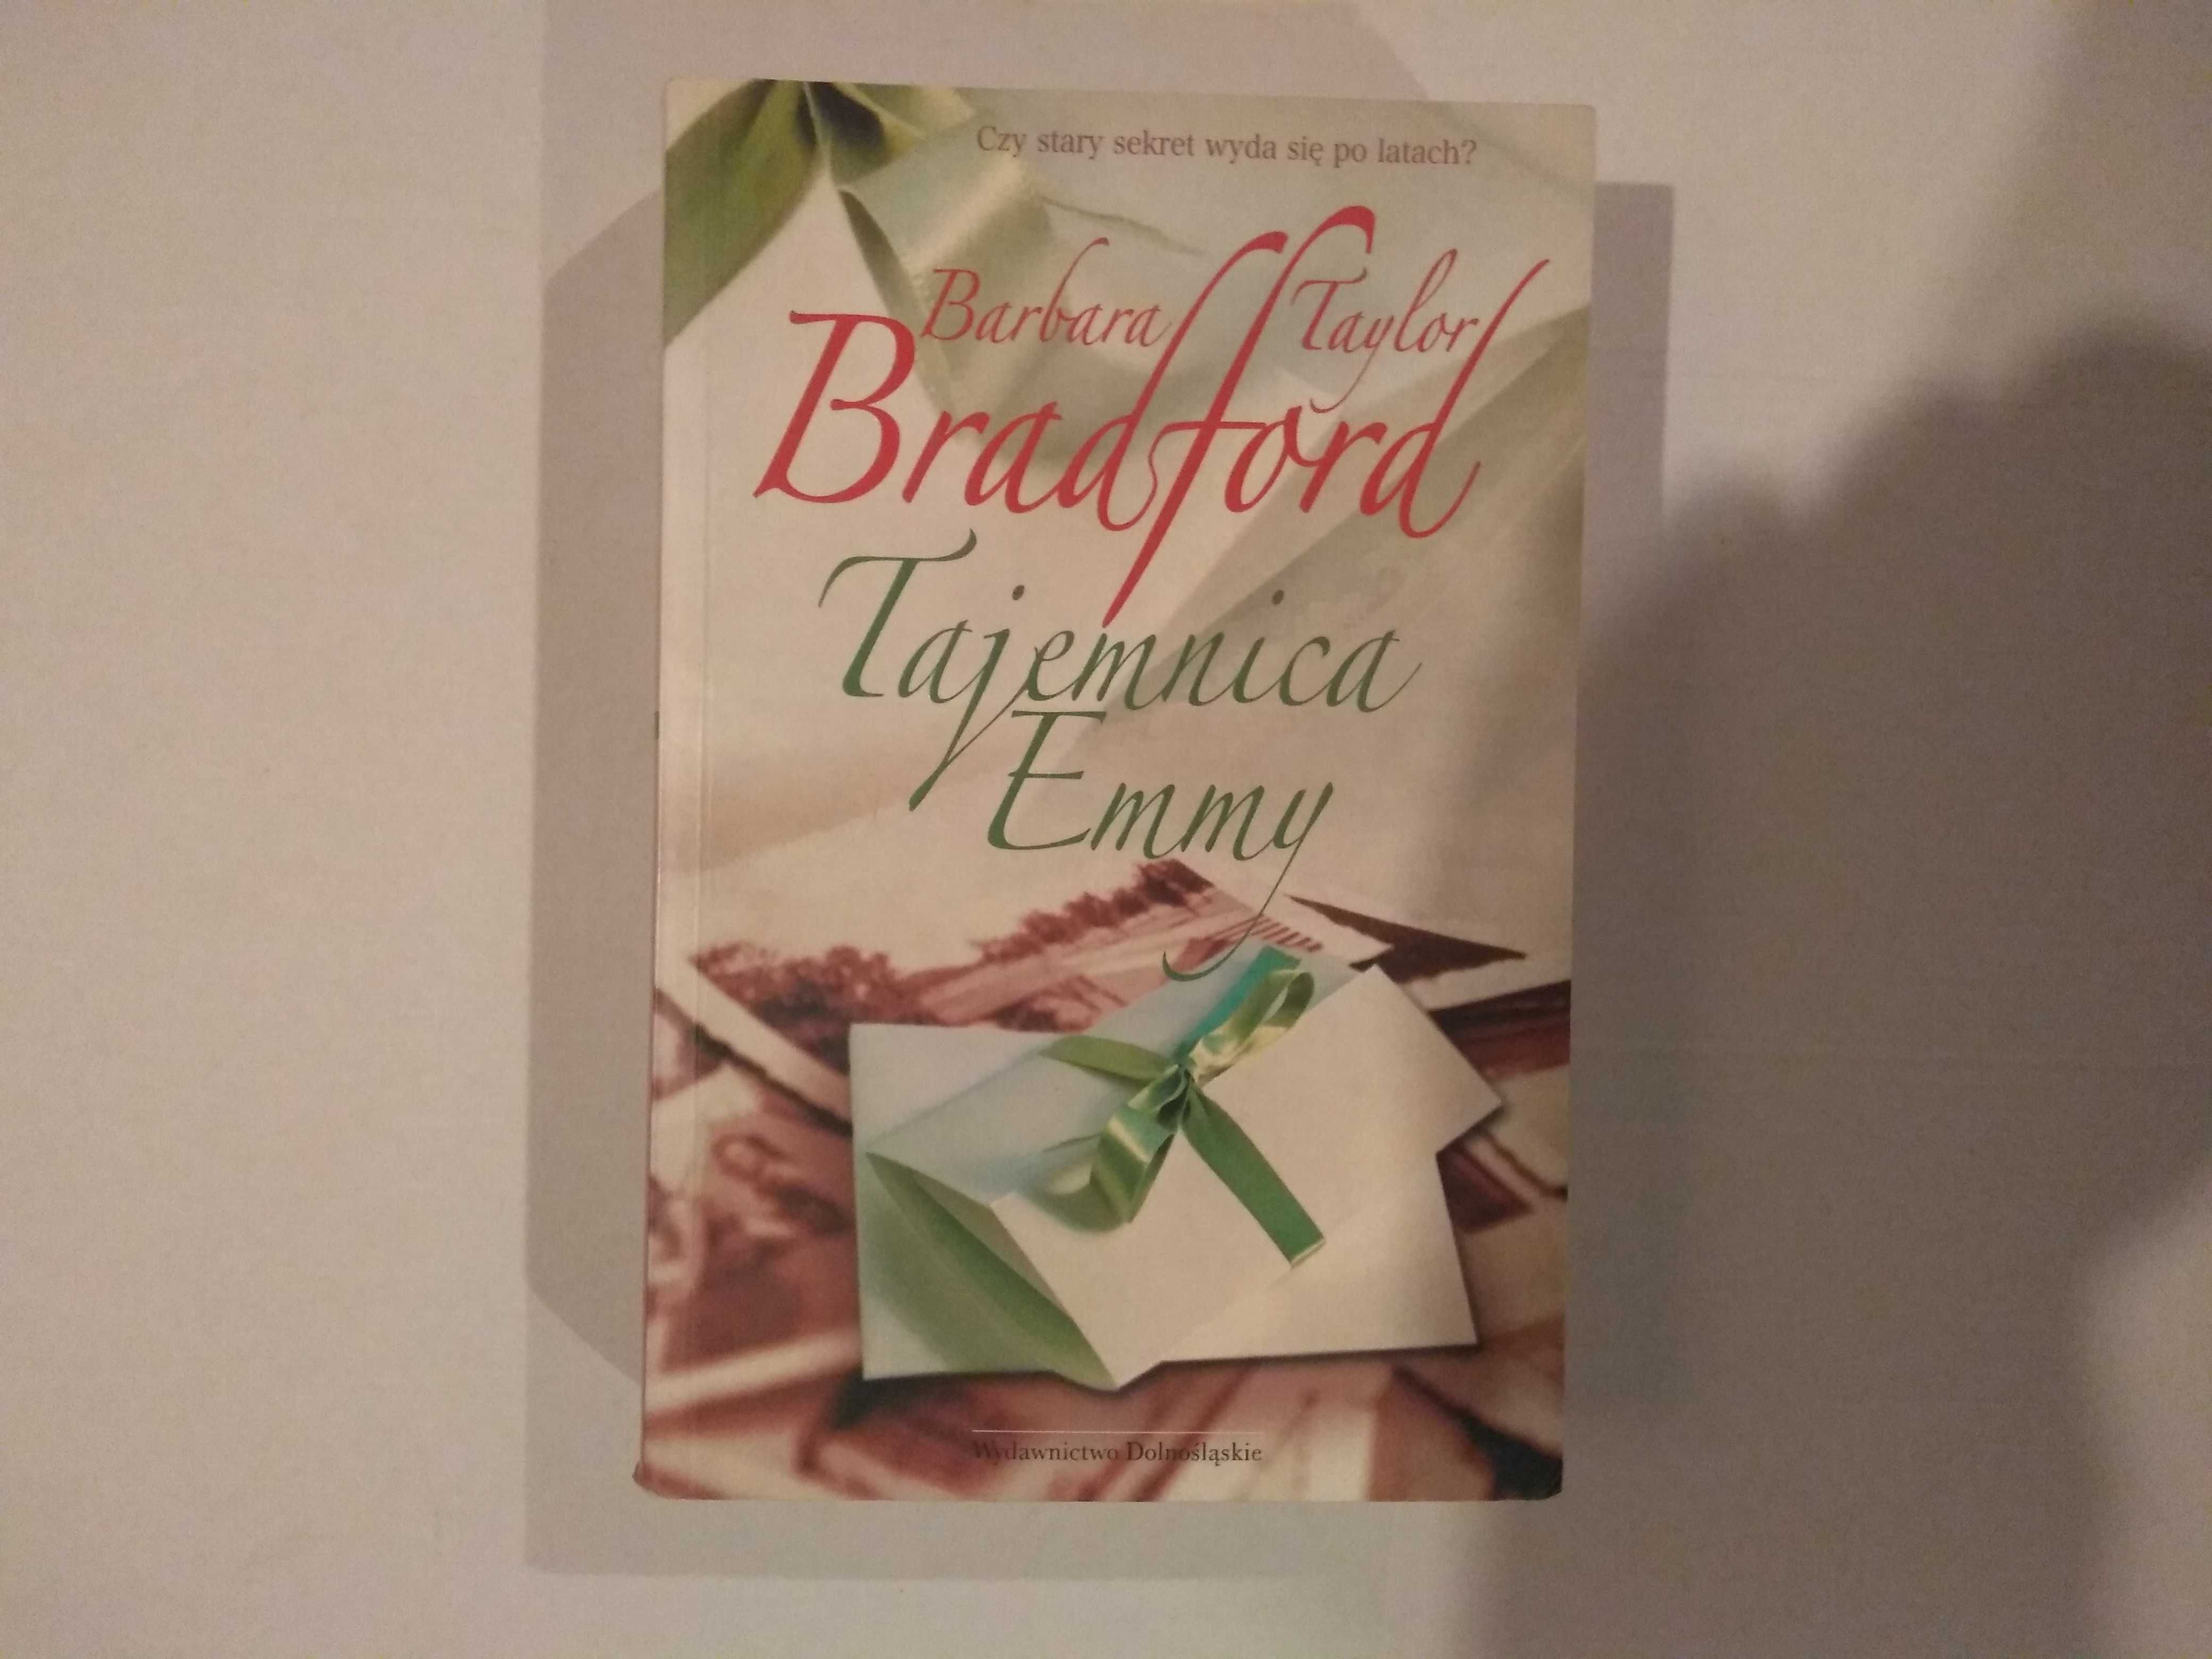 Dobra książka - Tajemnice Emmy Barbara Taylor Bracford